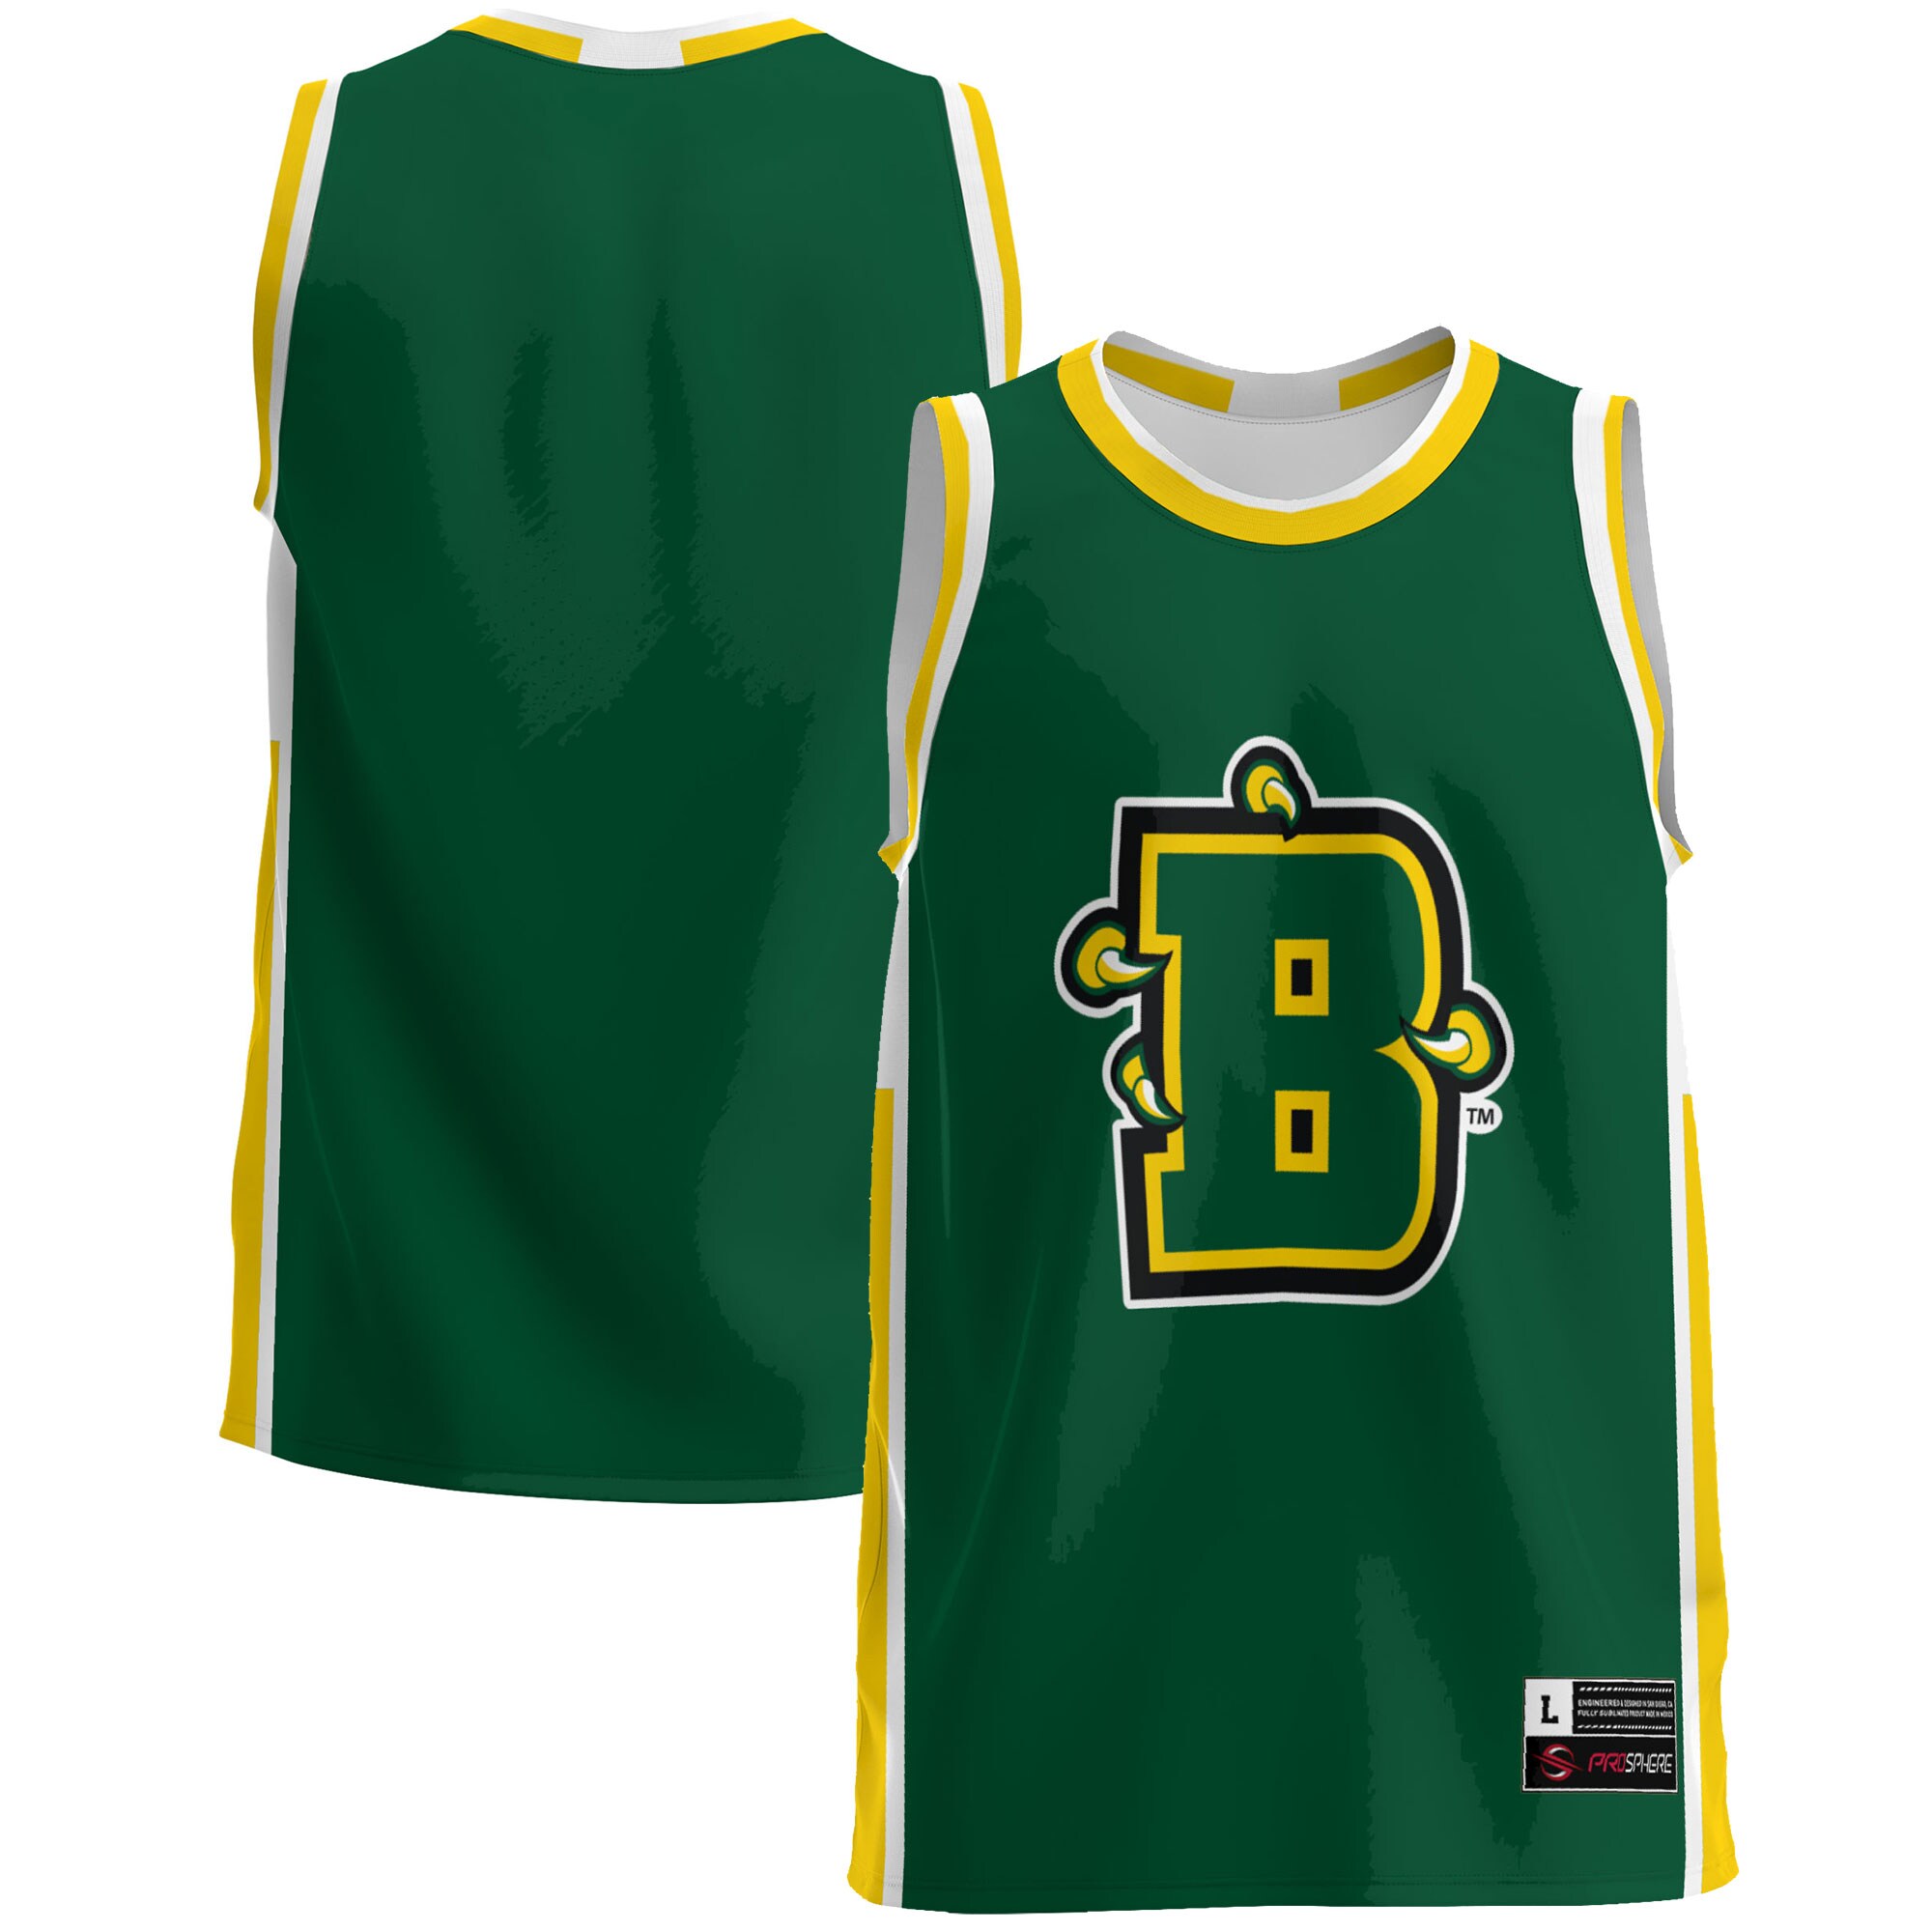 Suny Brockport Golden Eagles Basketball Jersey - Green For Youth Women Men